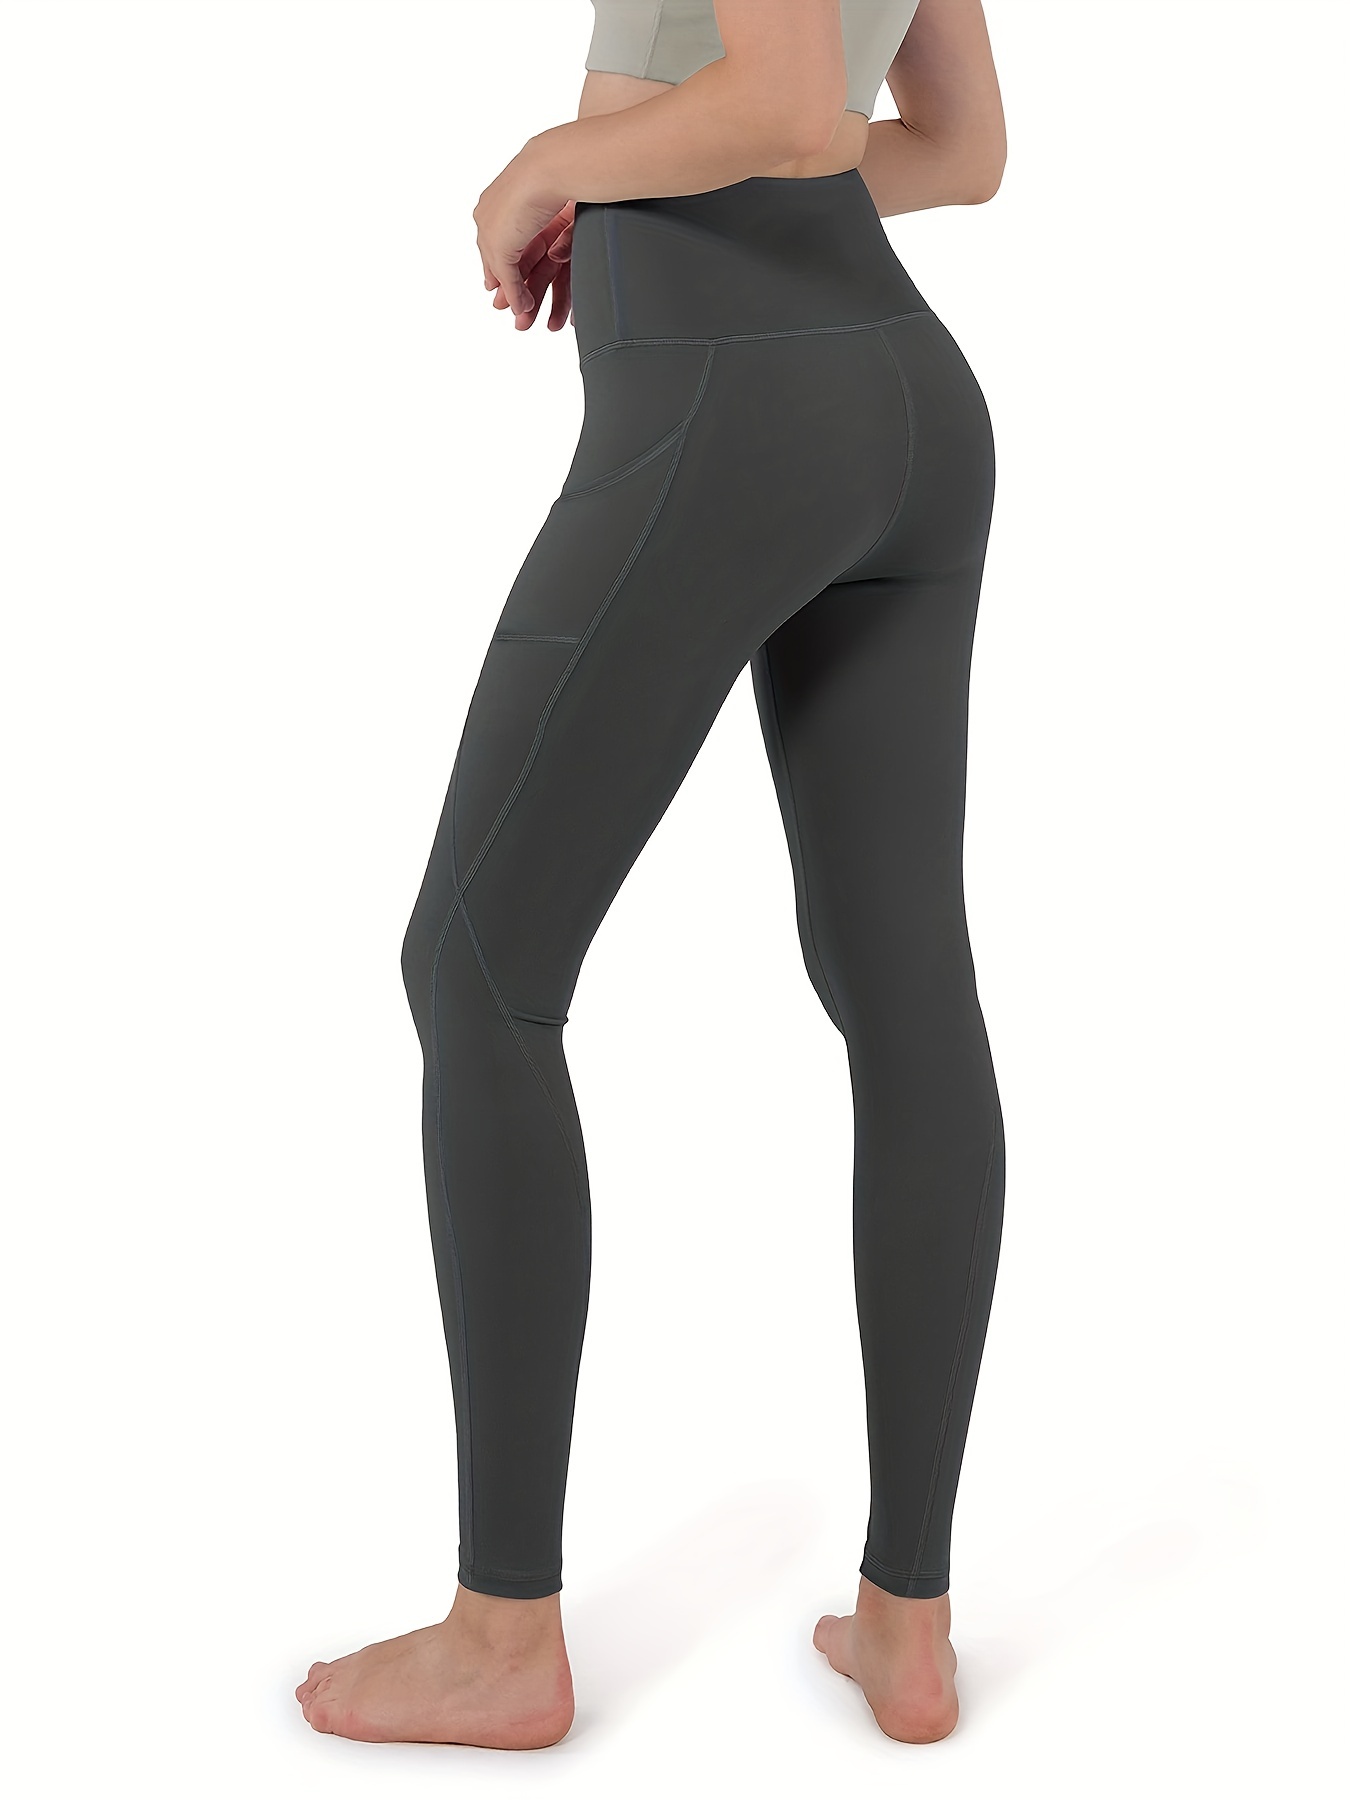  Kadi Women's High Waisted Yoga Pants - 7/8 Length Leggings with  Side Pockets, Black, X-Small : Clothing, Shoes & Jewelry